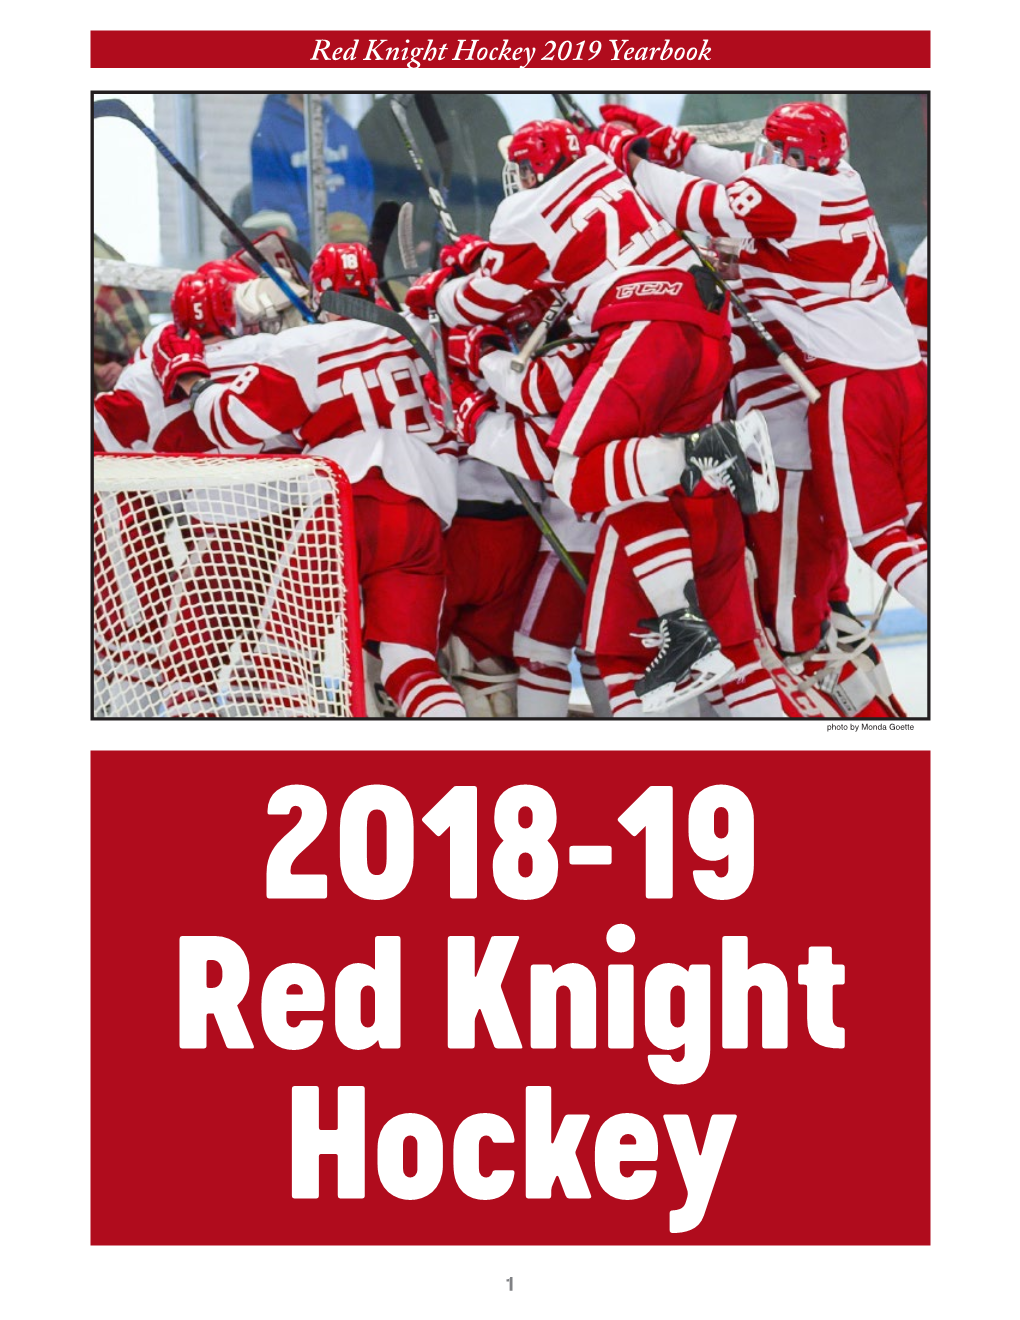 Red Knight Hockey 2019 Yearbook